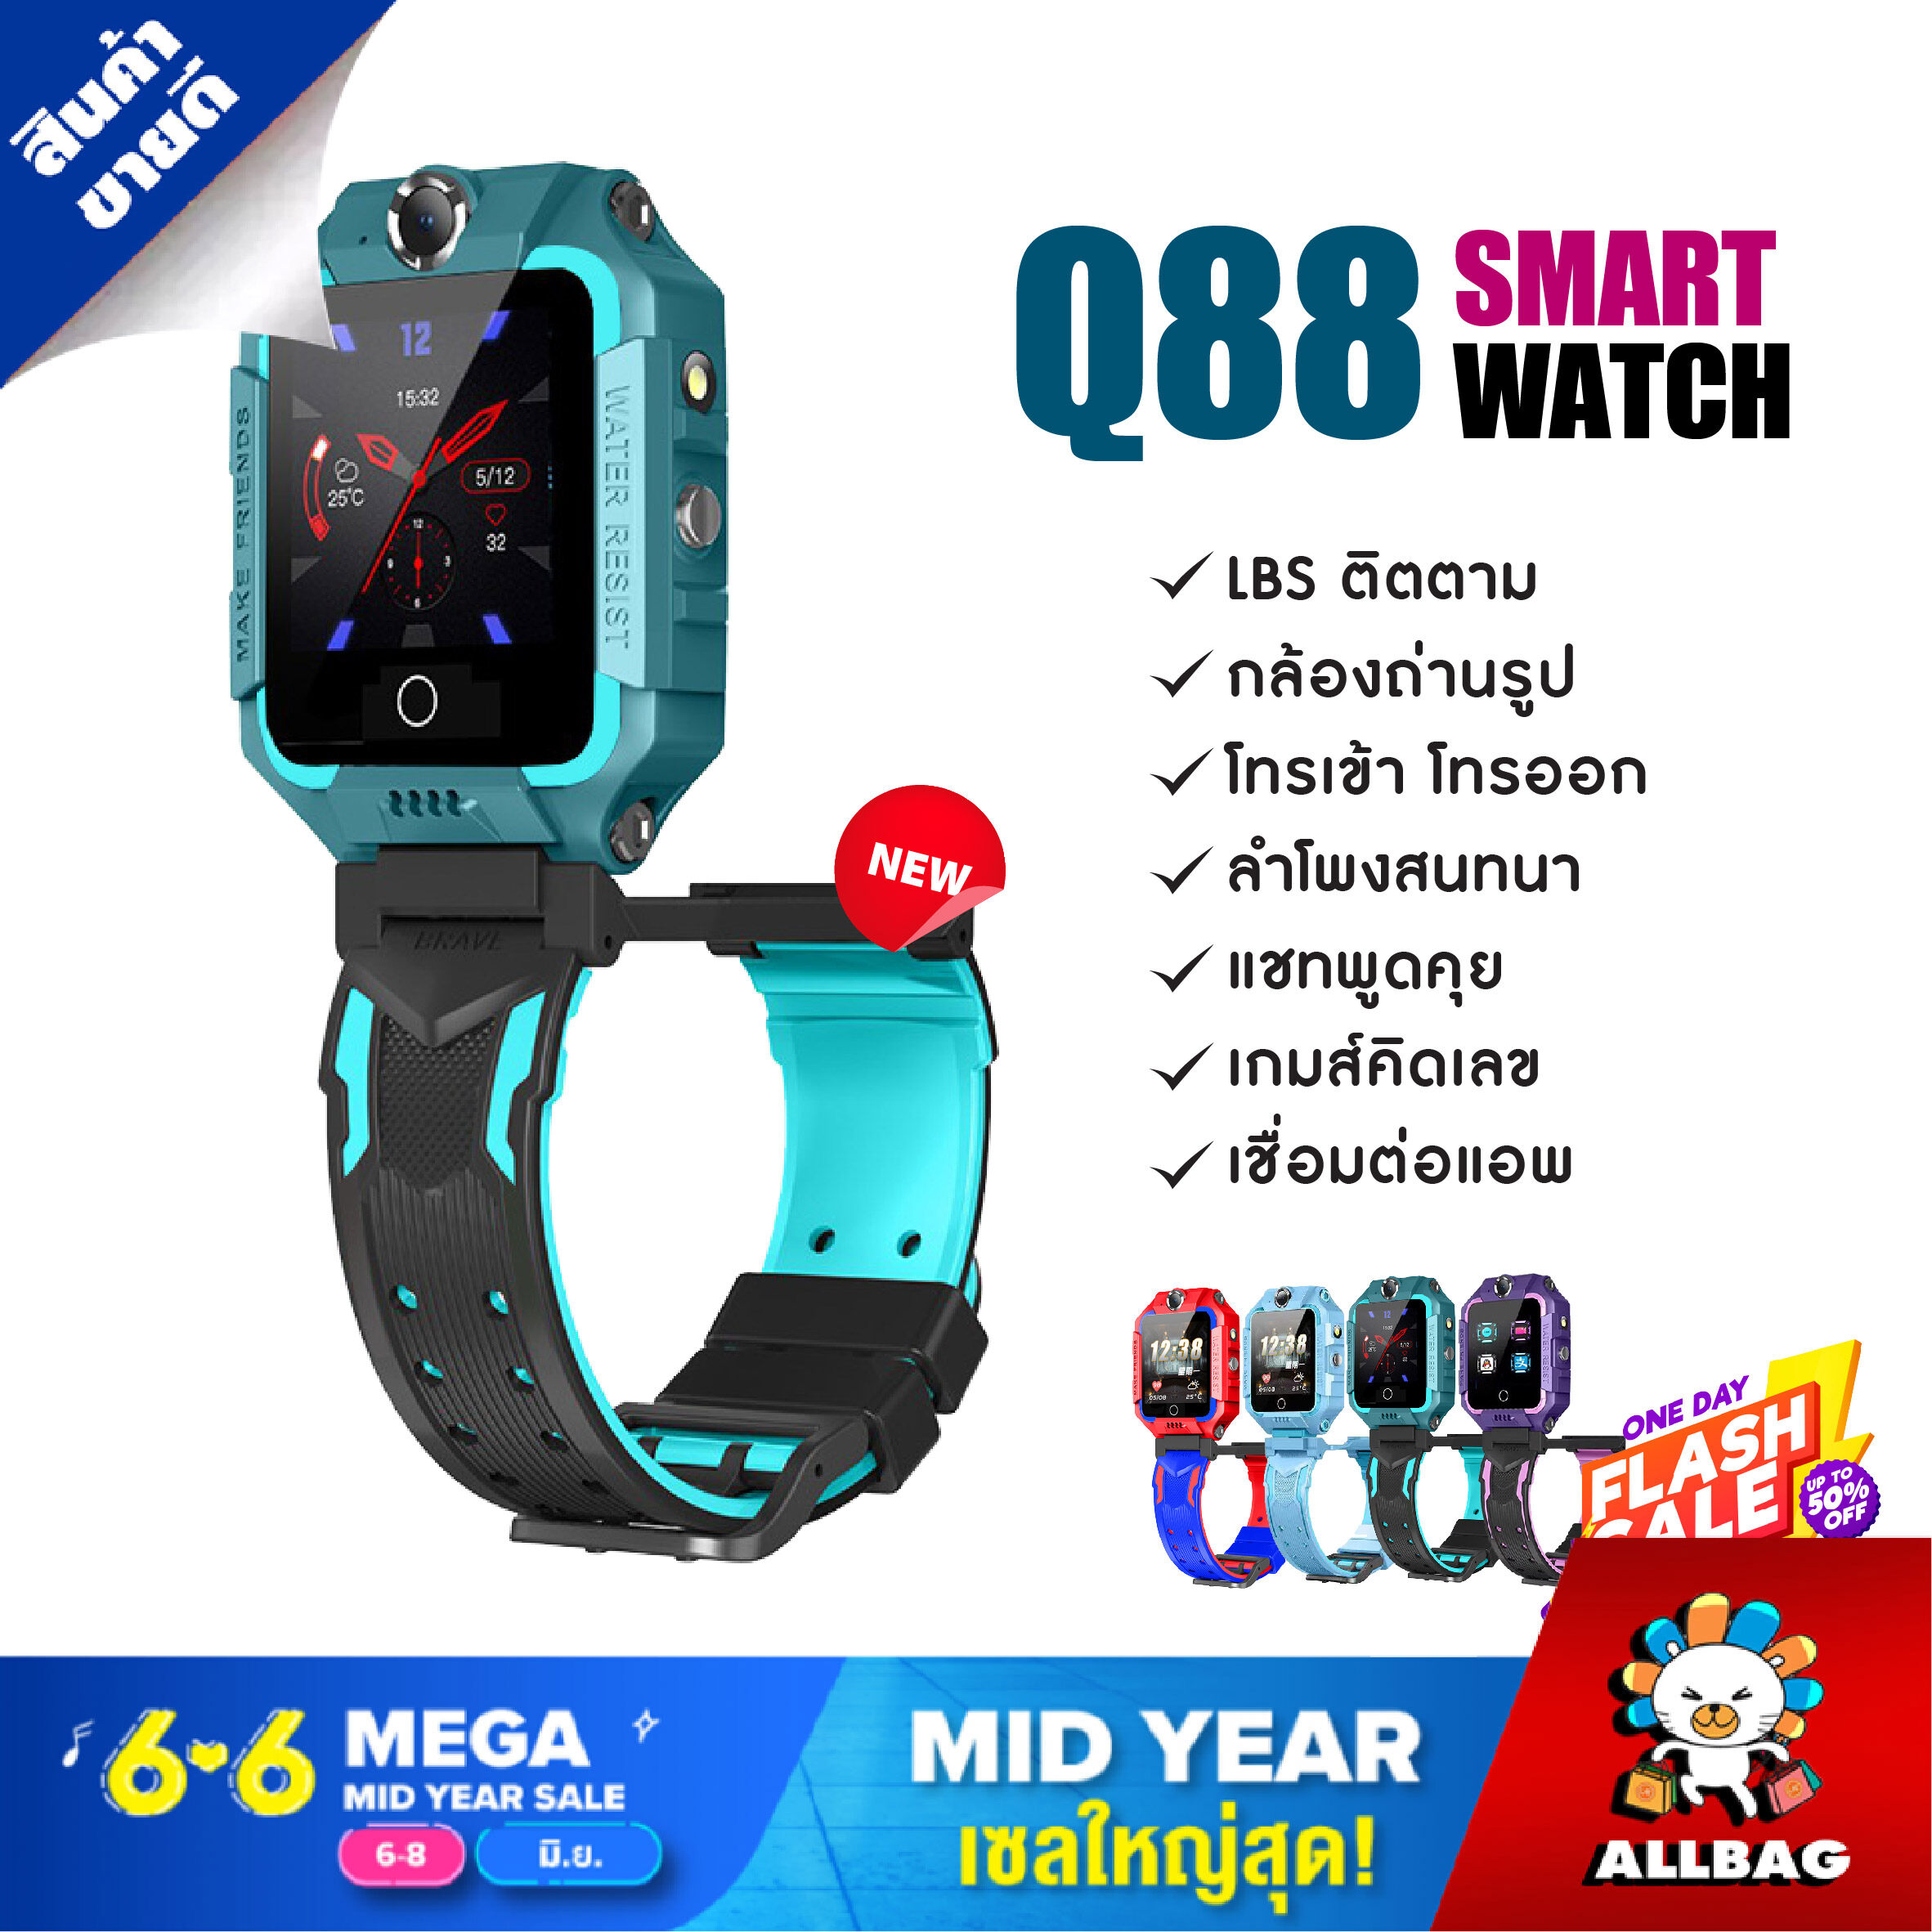 allbag ใหม่ Q88 Smart Watch นาฬิกาข้อมือเด็ก สมาร์ทวอทช์ อัจฉริยะ GPS ติดตามตำแหน่ง Anti Lost Monitor (ส่งไว 1-3 วัน พร้อมรับประกันสินค้า)